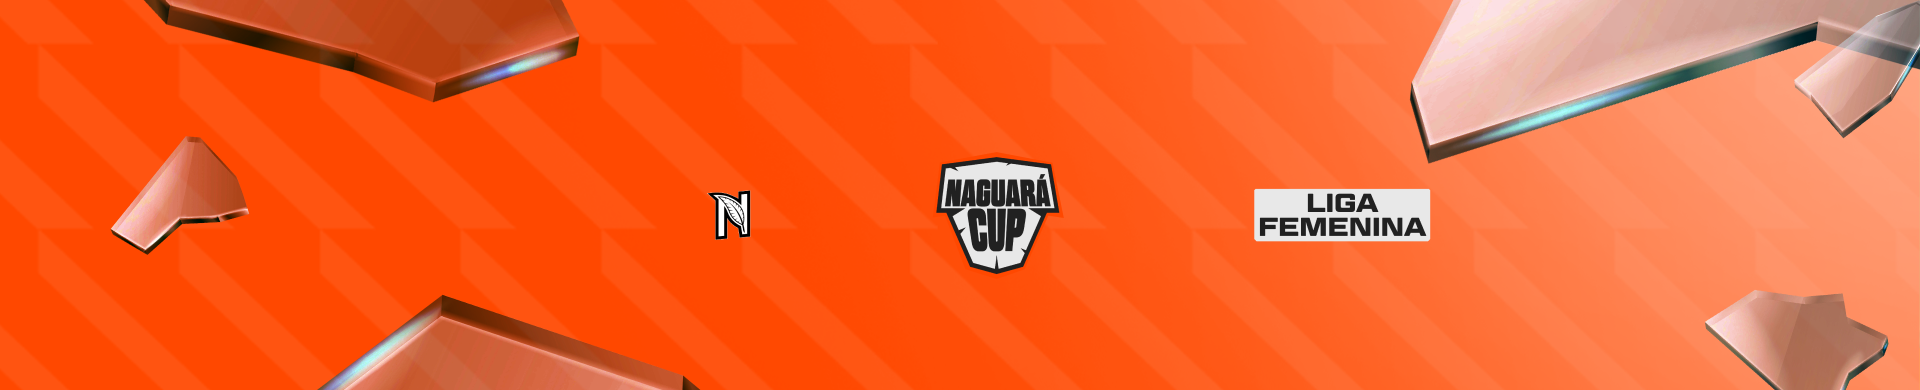 Naguará Cup FEM Liga C - FreeFire - US